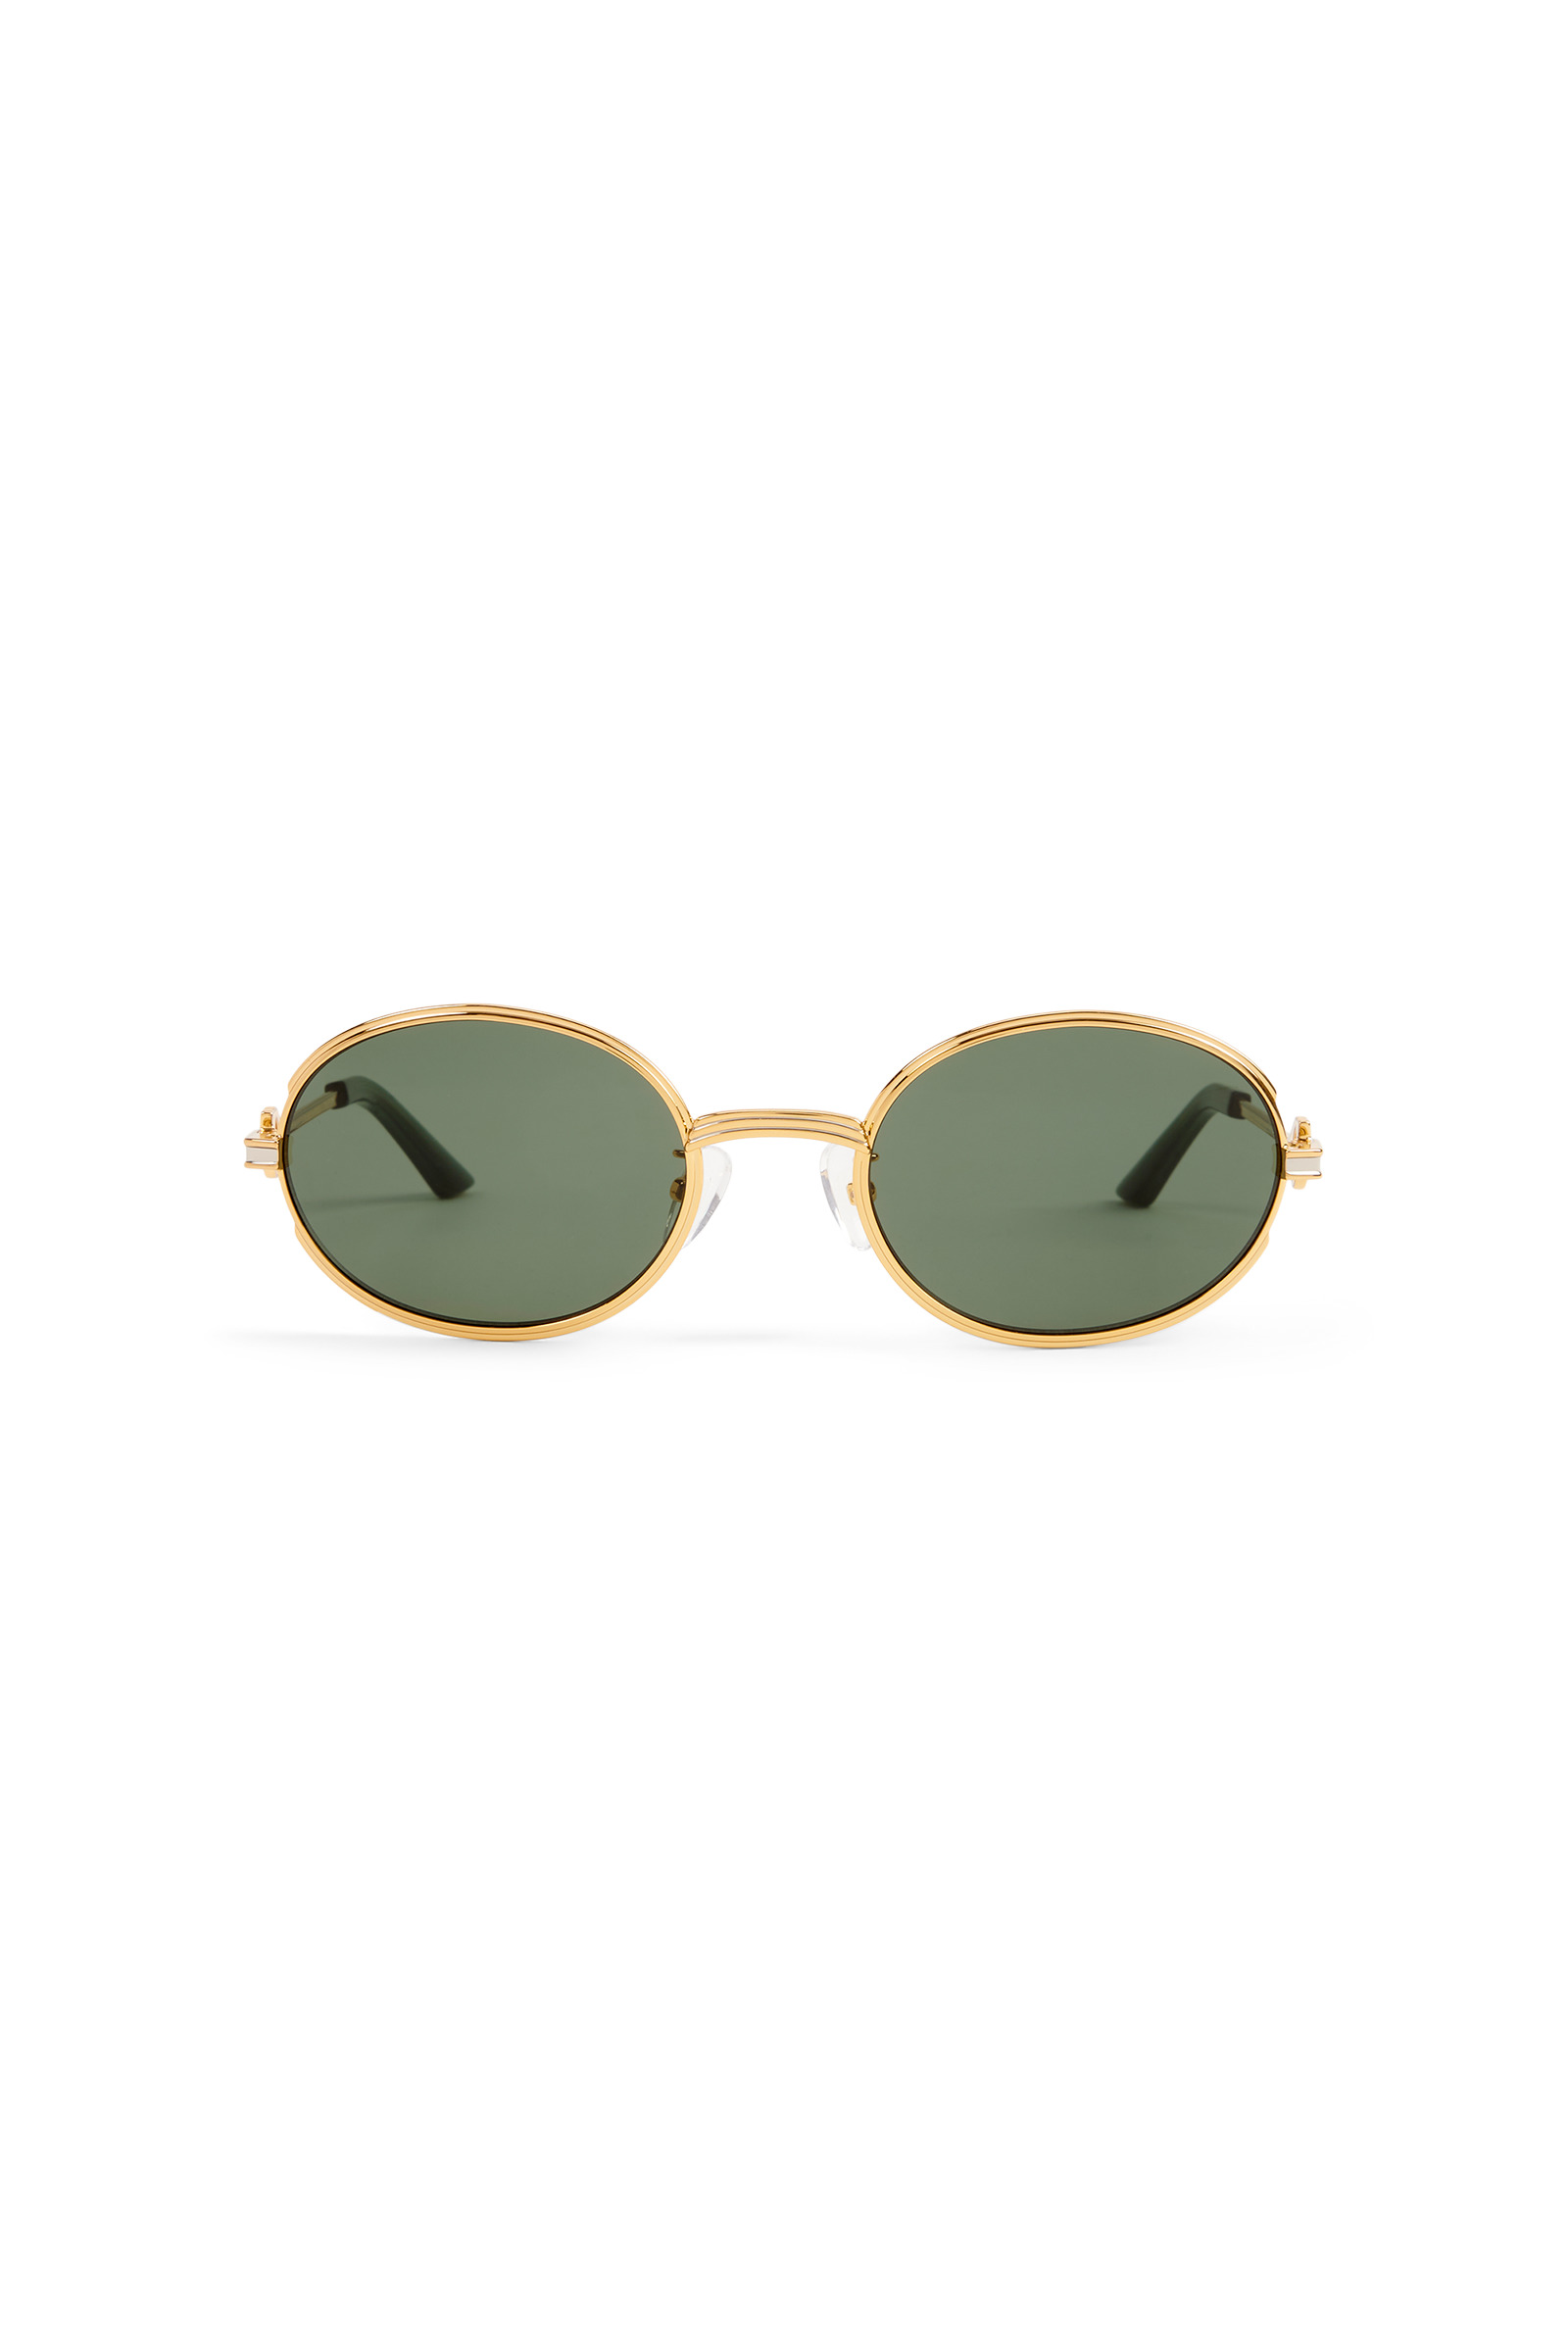 Green & Gold The Hero Sunglasses - 2